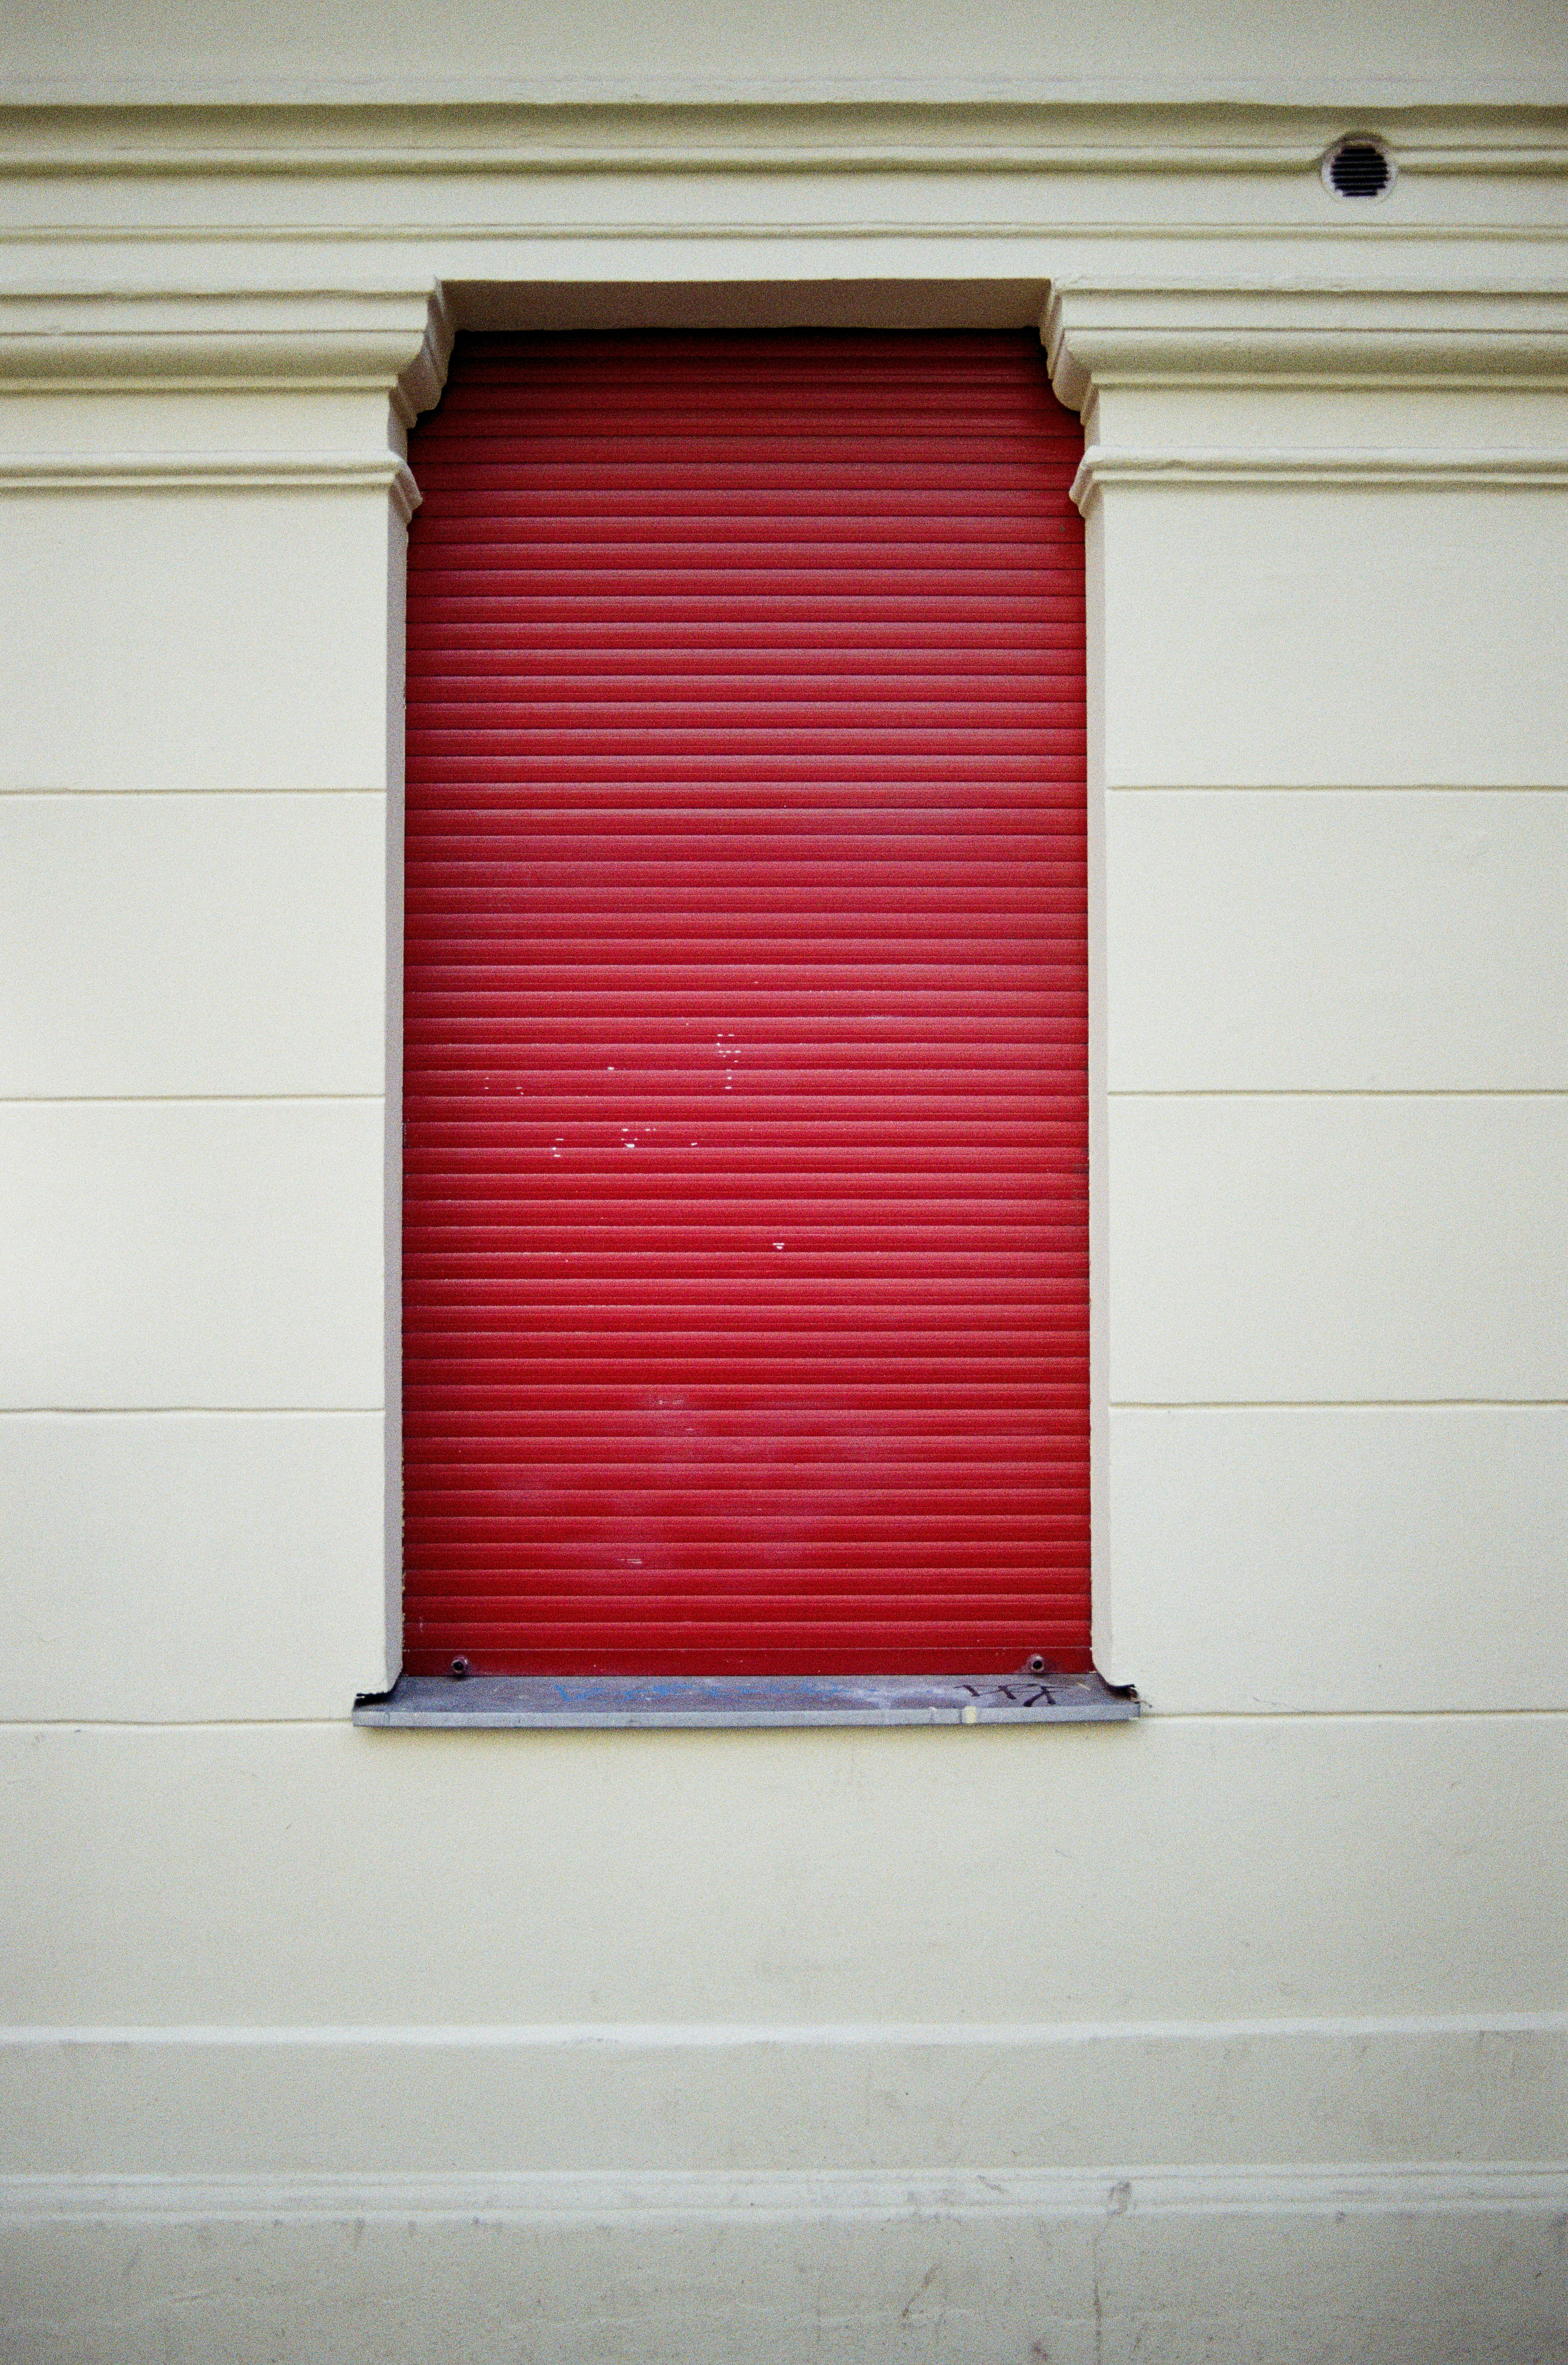 red window